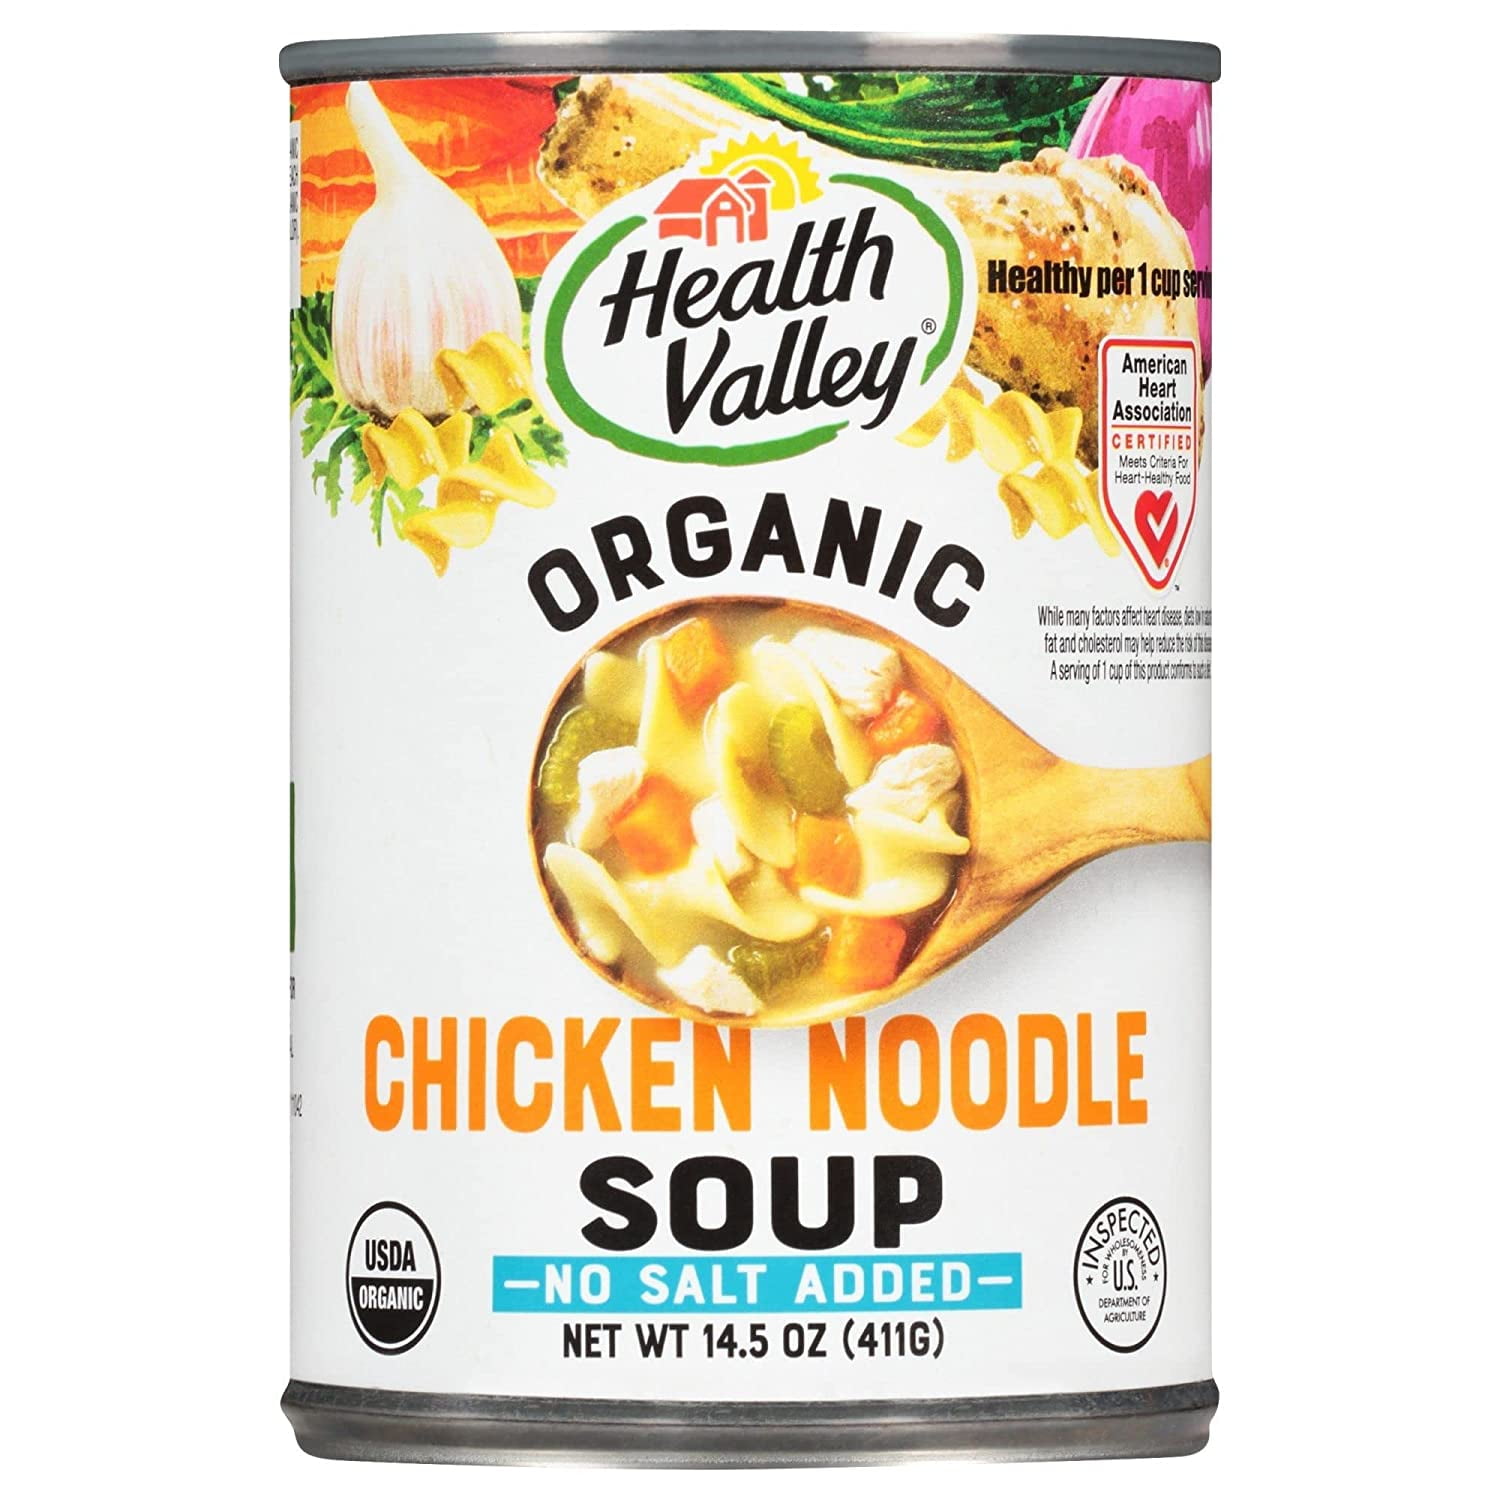 Vegan Chicken Noodle Soup, 24 oz at Whole Foods Market